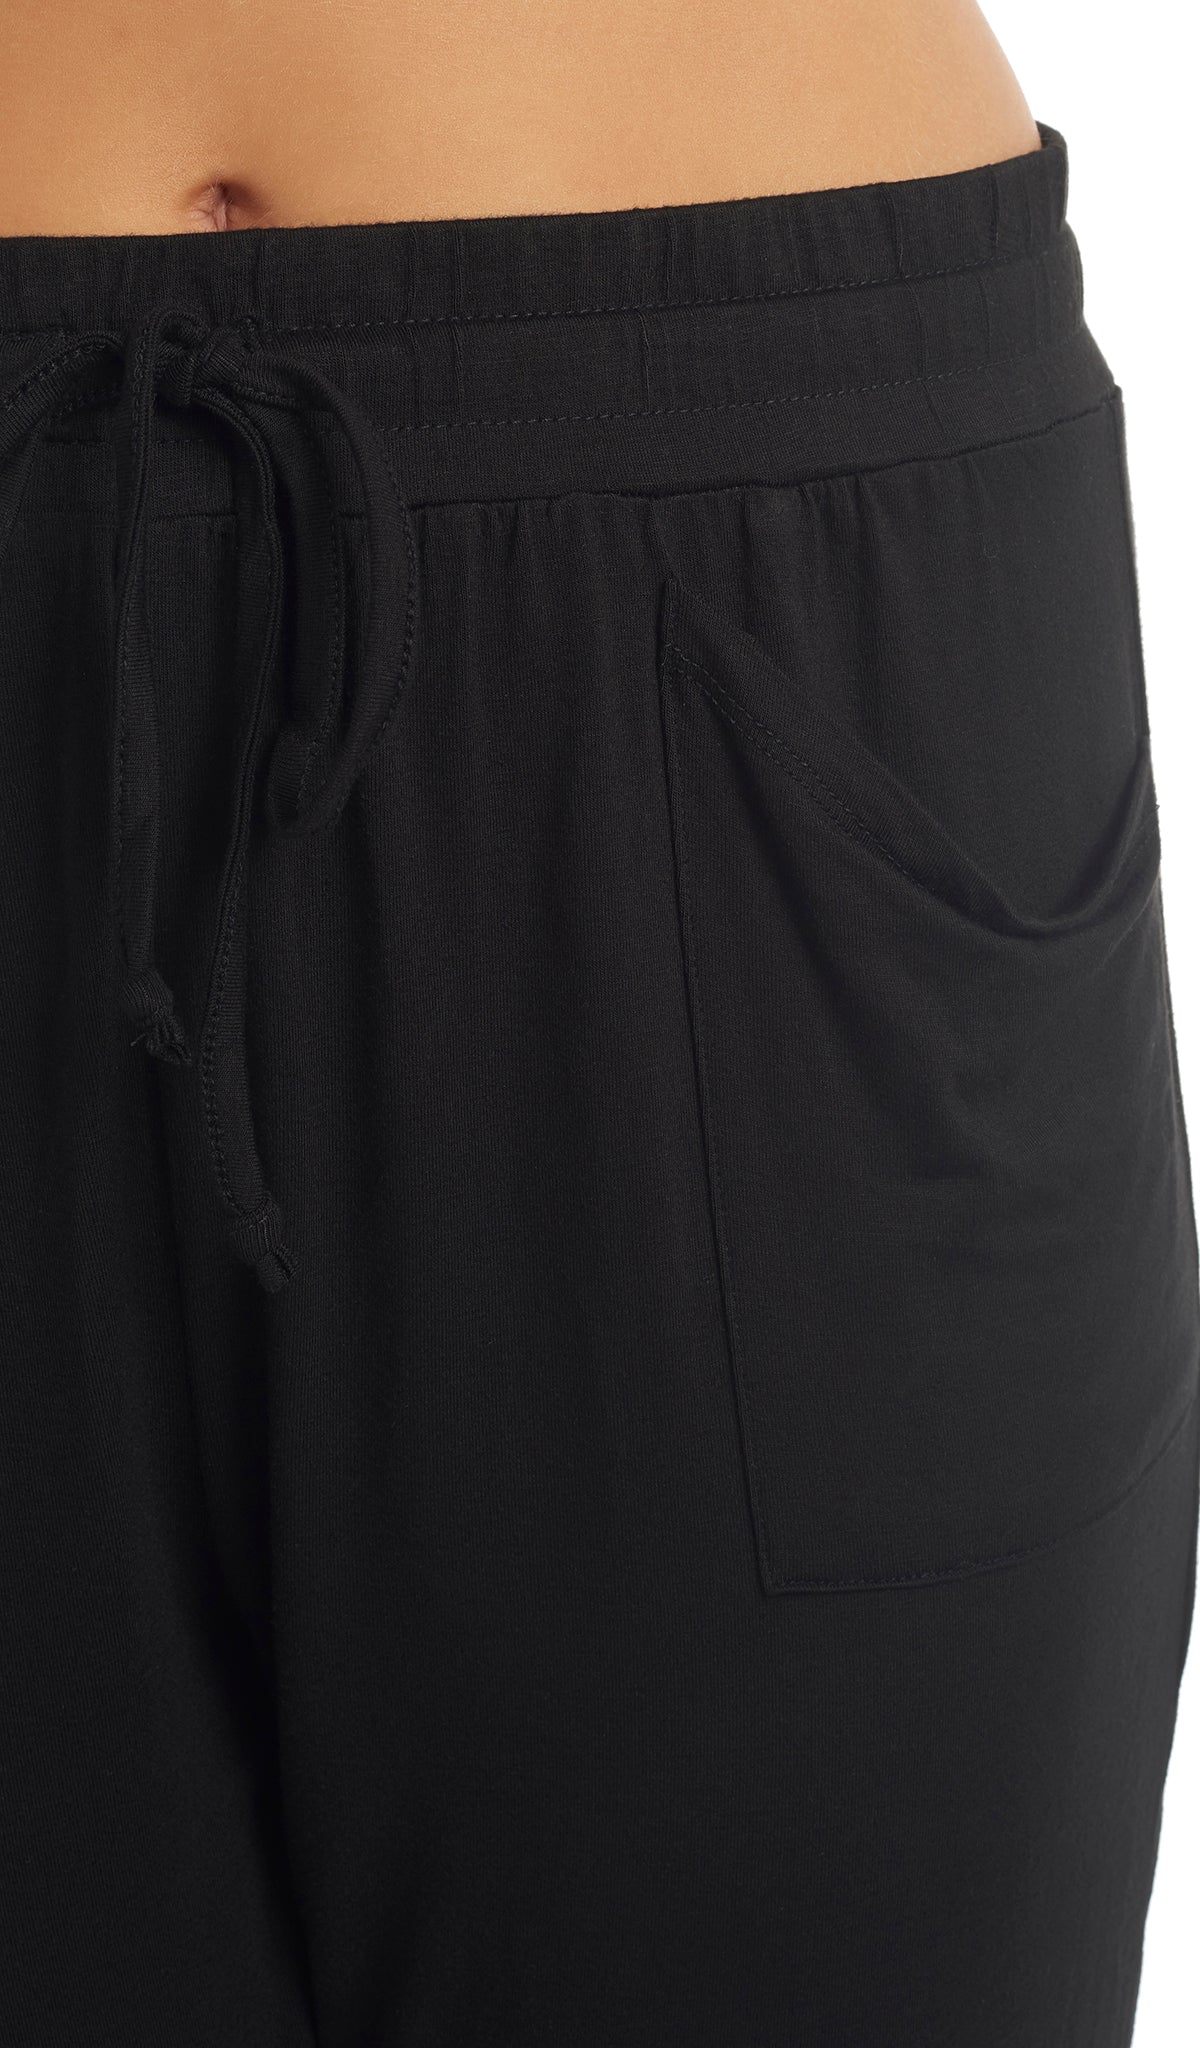 Black Whitney 2-Piece drawstring waistband and pocket detail.